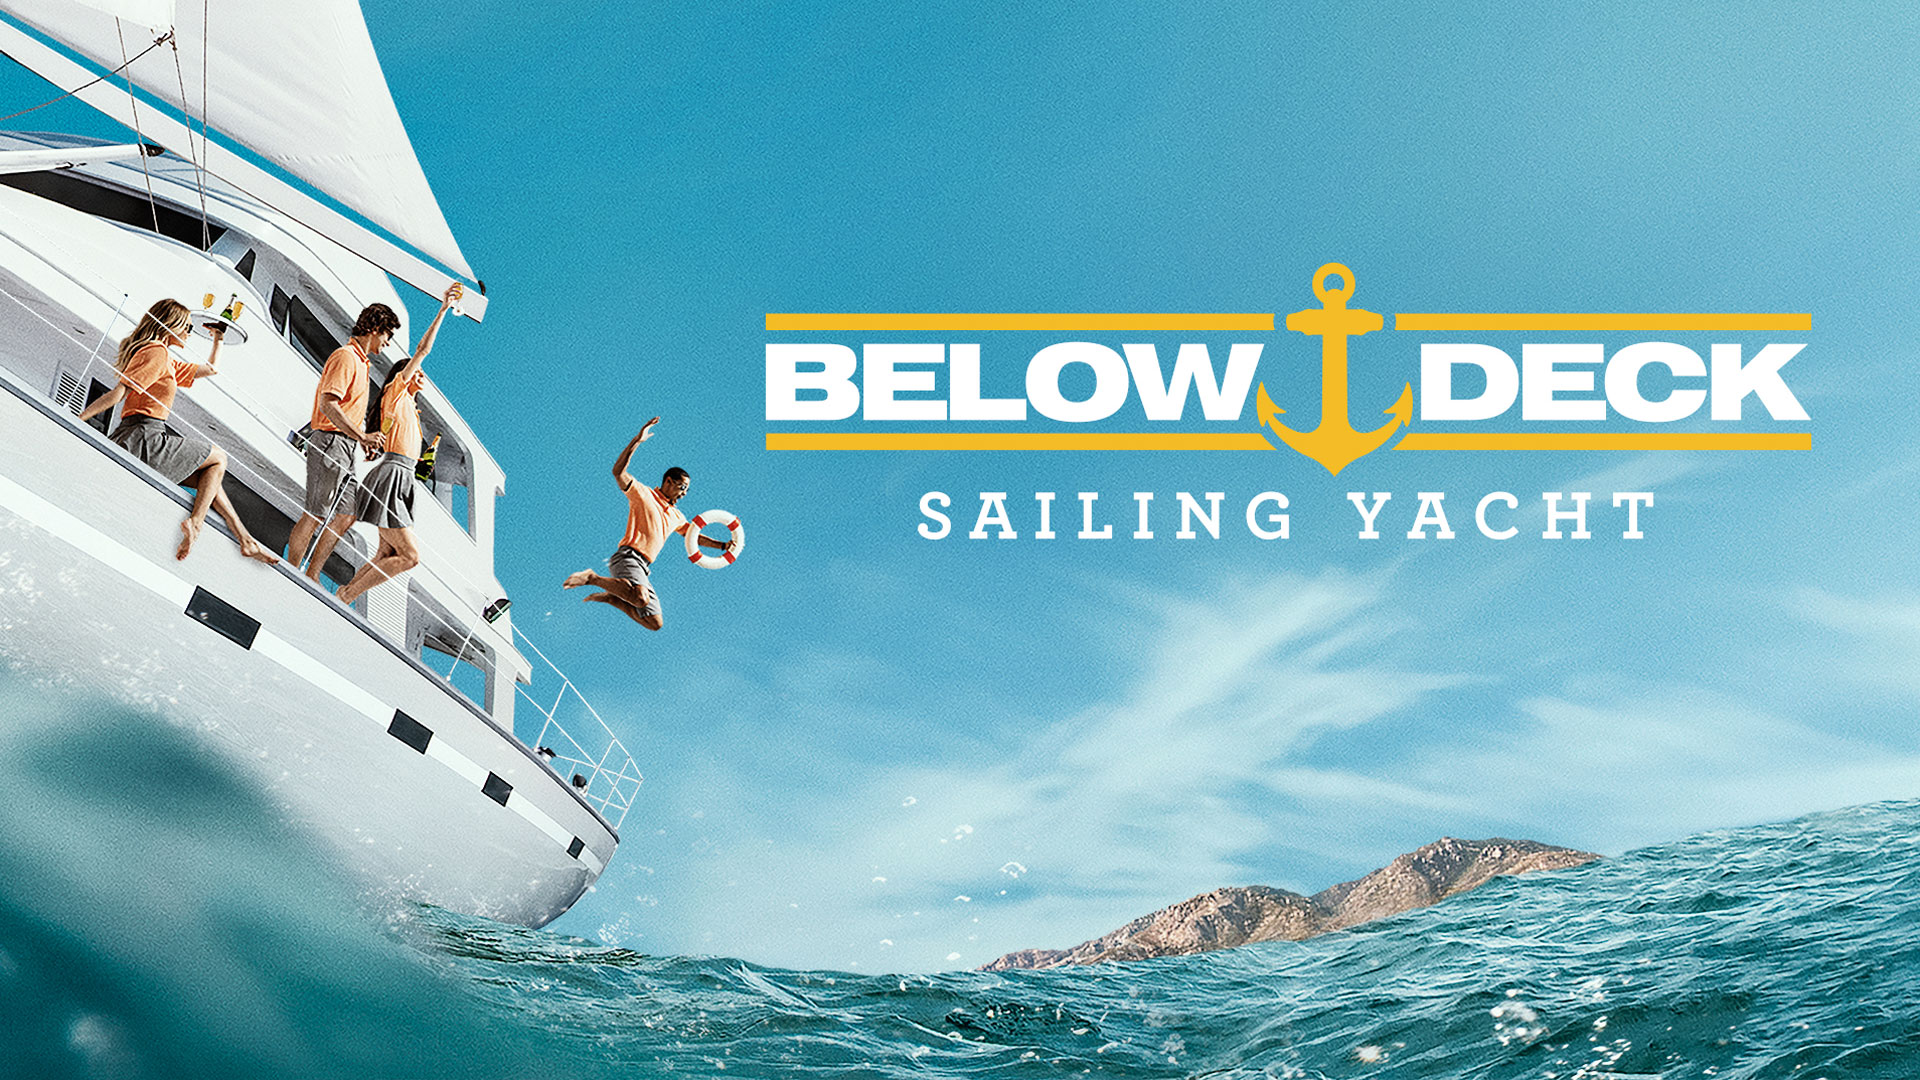 Below Deck Sailing Yacht - New Season February 21